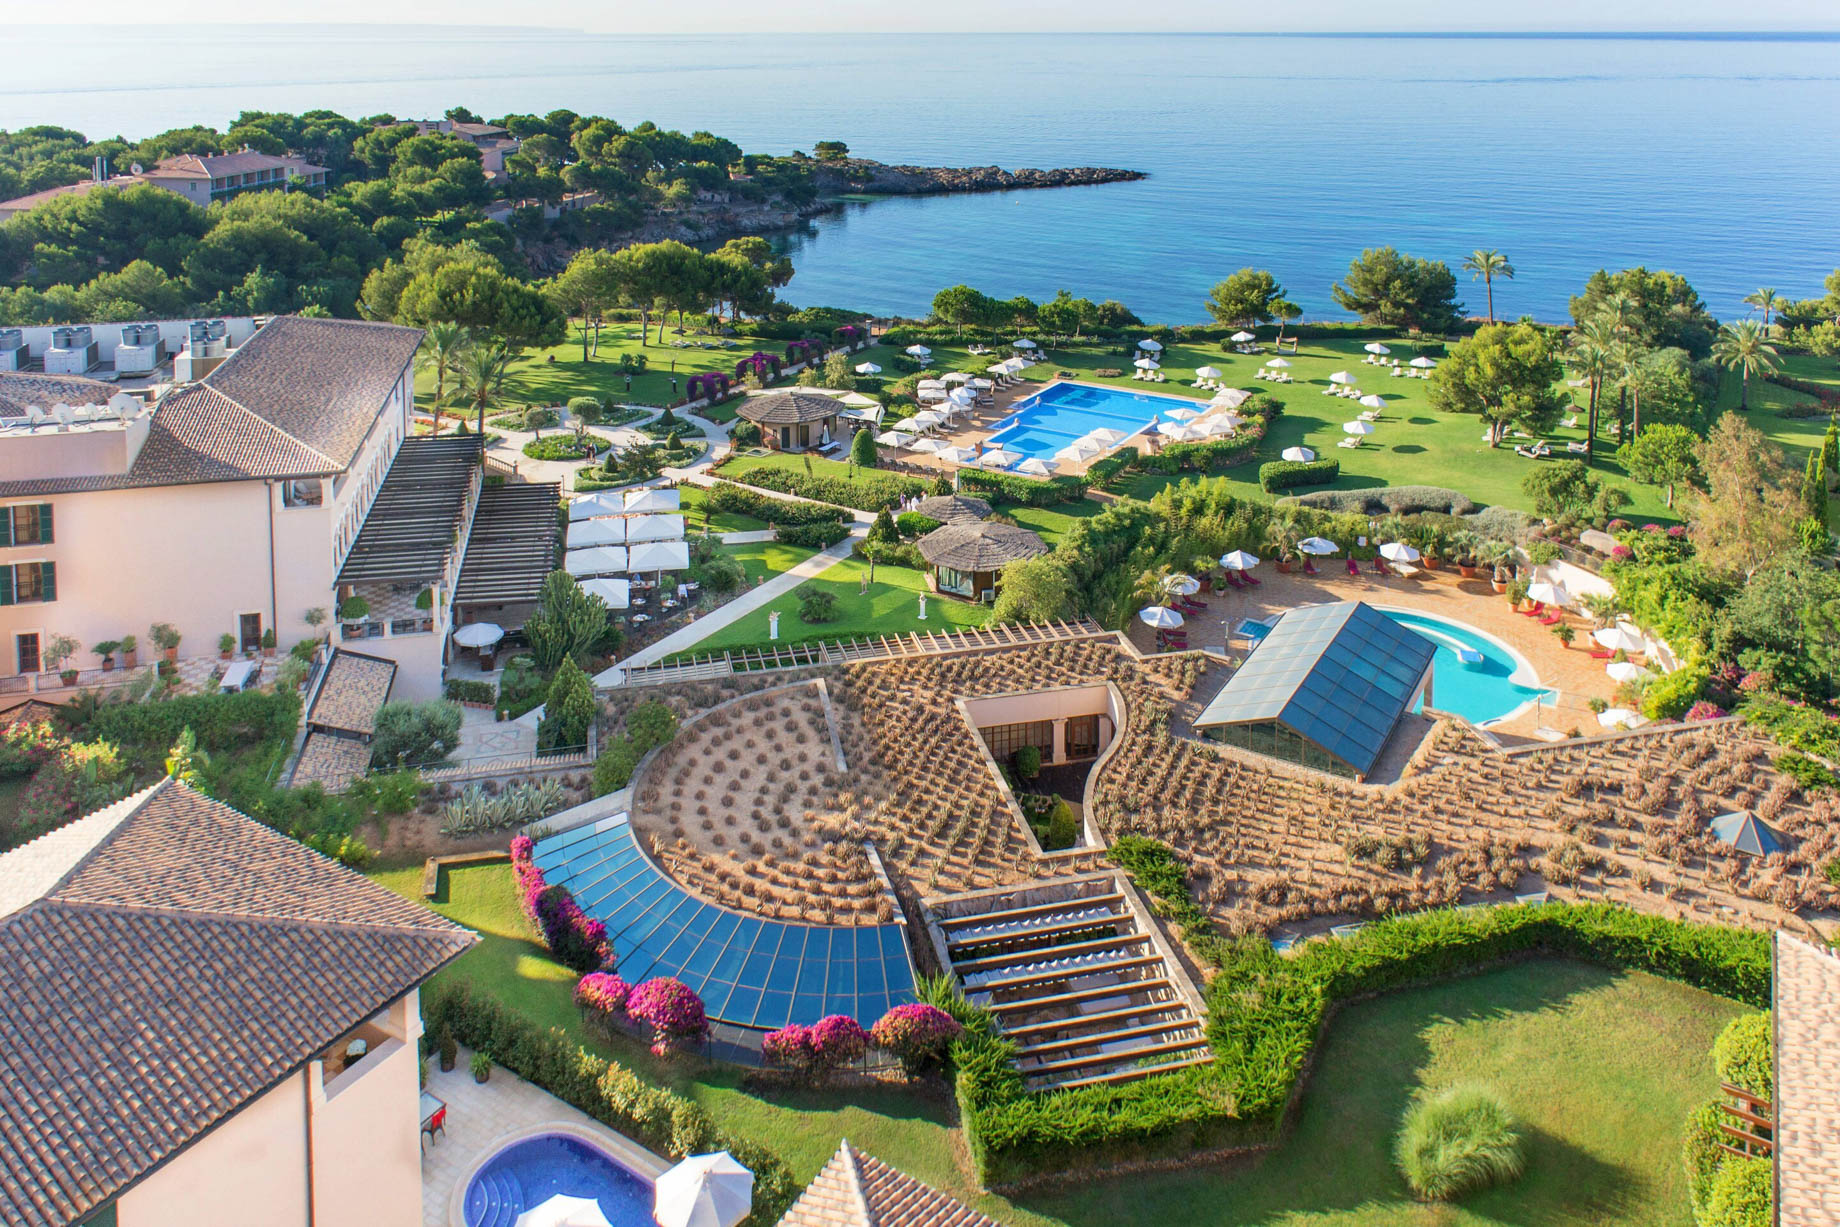 The St. Regis Mardavall Mallorca Resort – Palma de Mallorca, Spain – Exterior Aerial